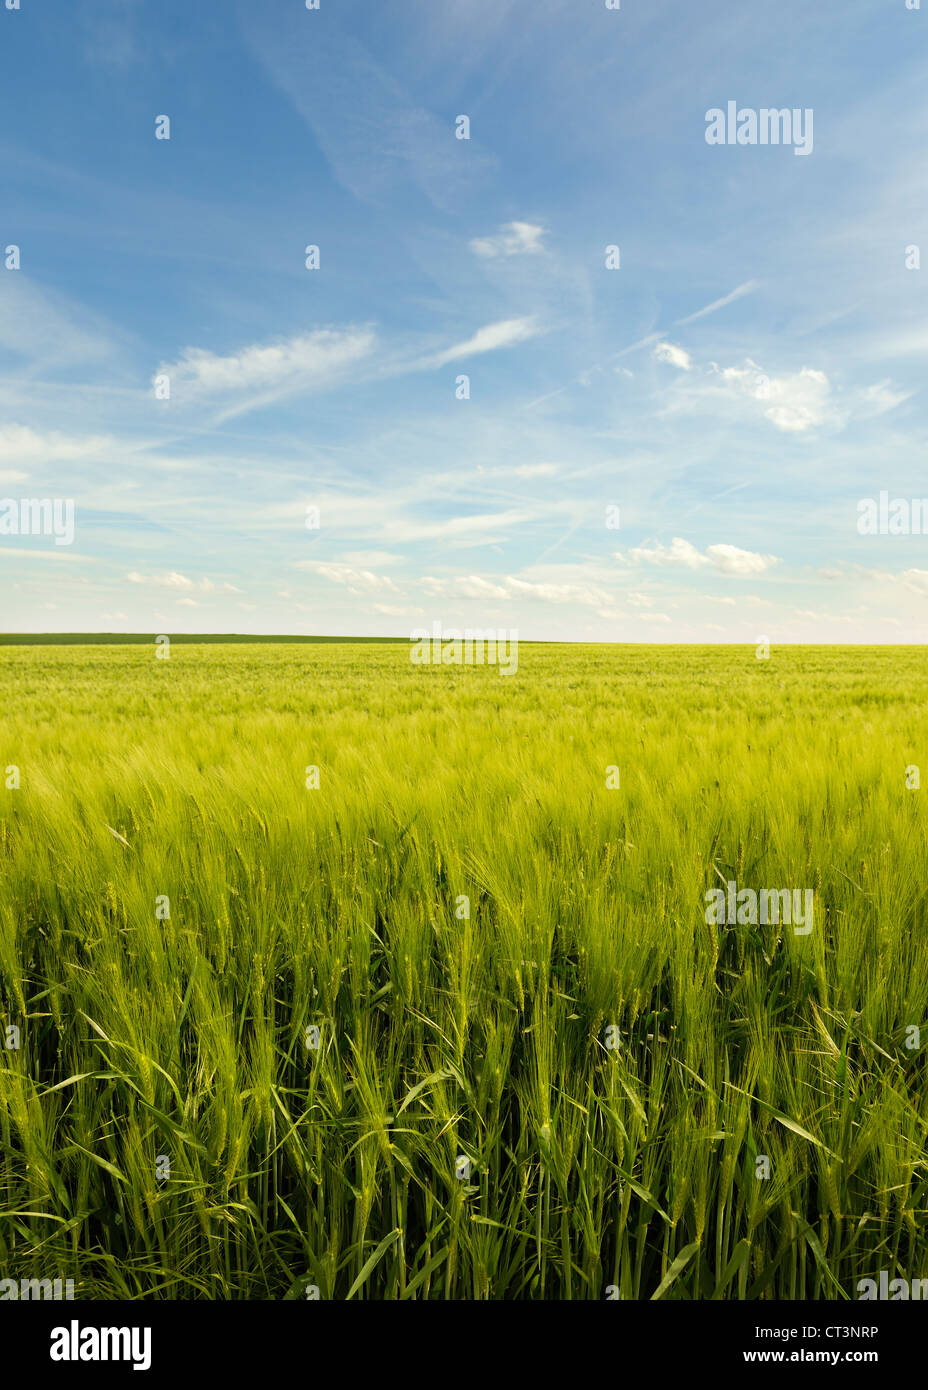 Field of tall grass under blue sky Stock Photo